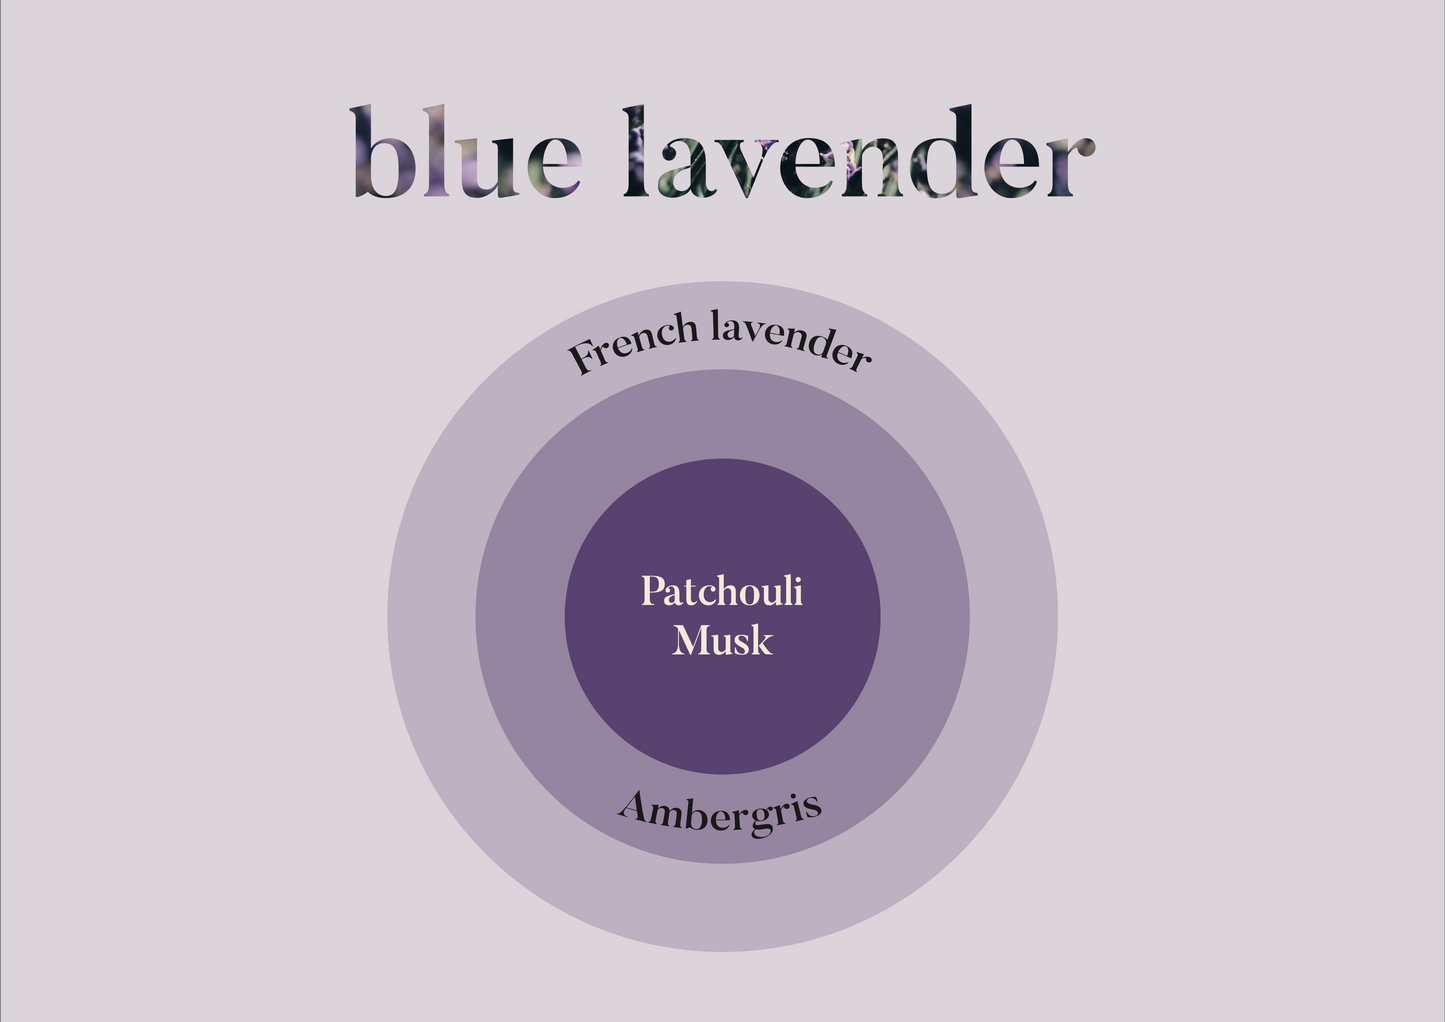 Blue lavender perfume